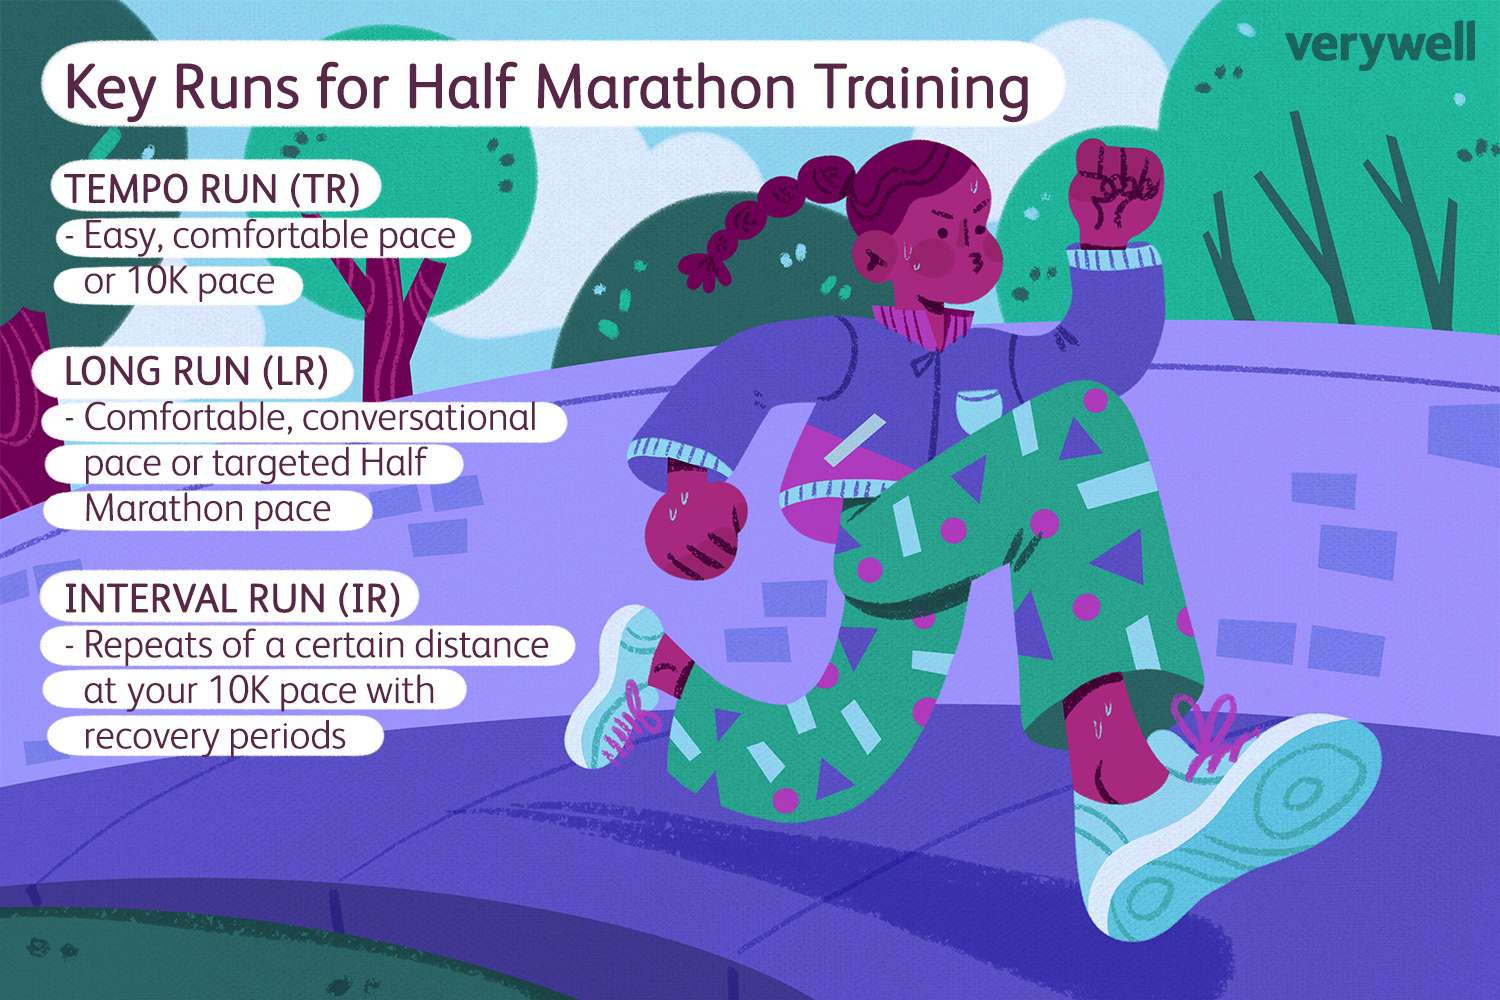 Key runs for half marathon training